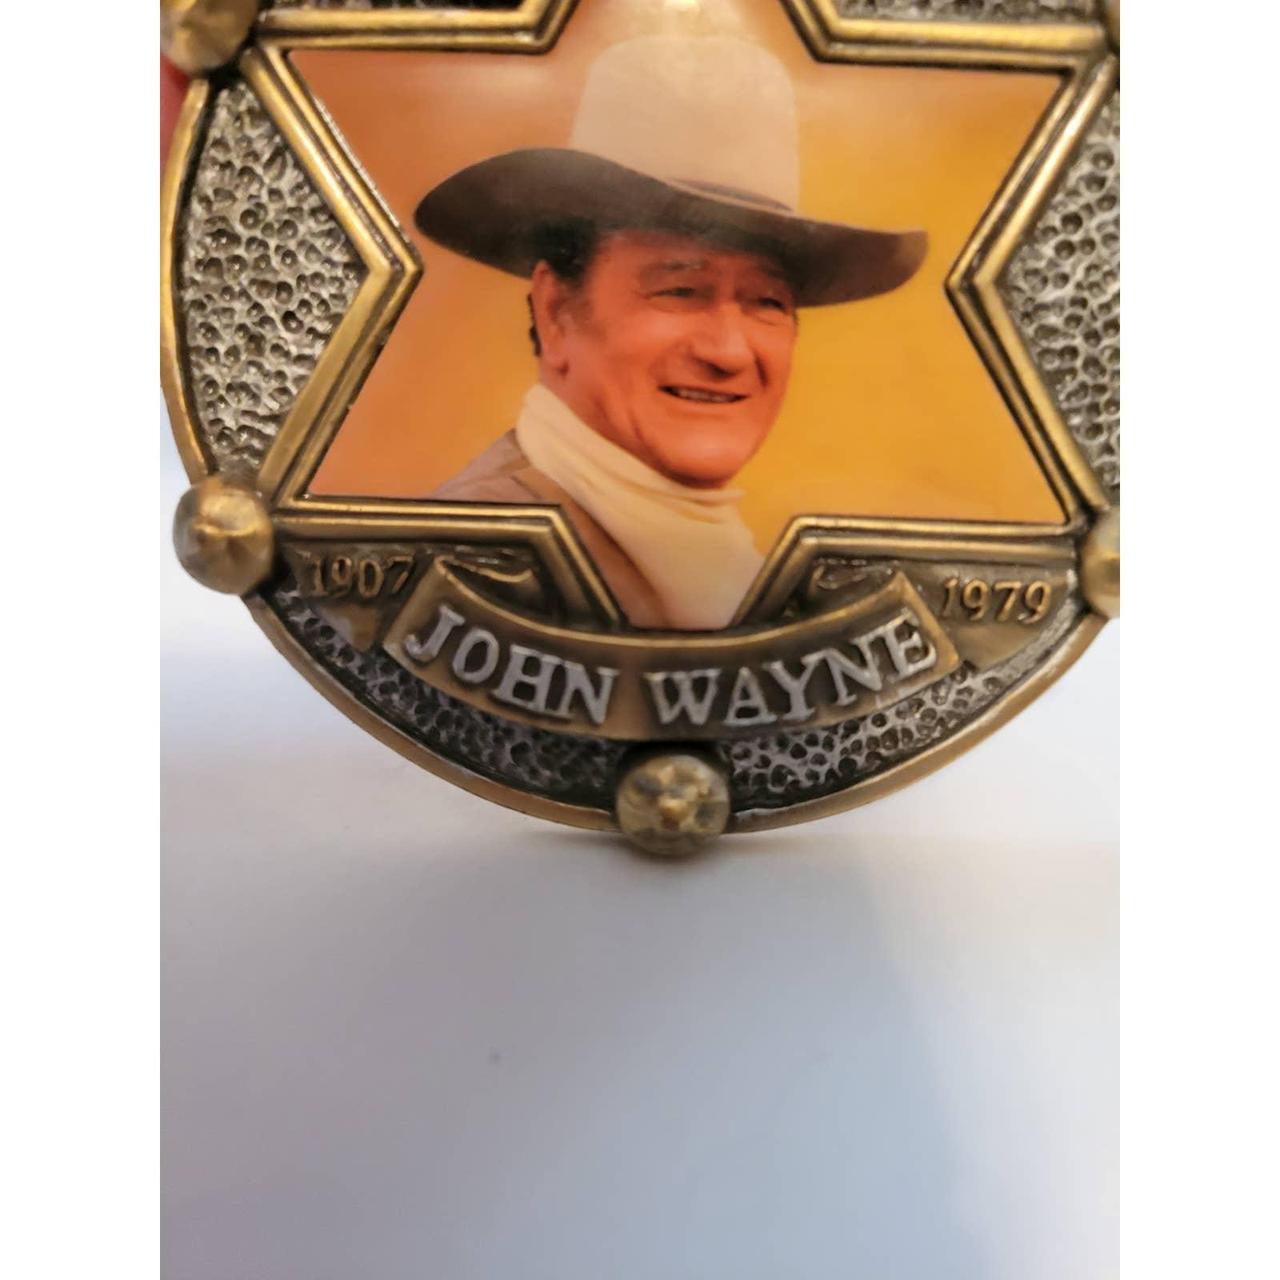 John Wayne 26 Bar Belt Buckle on a Sisco belt presented to him by